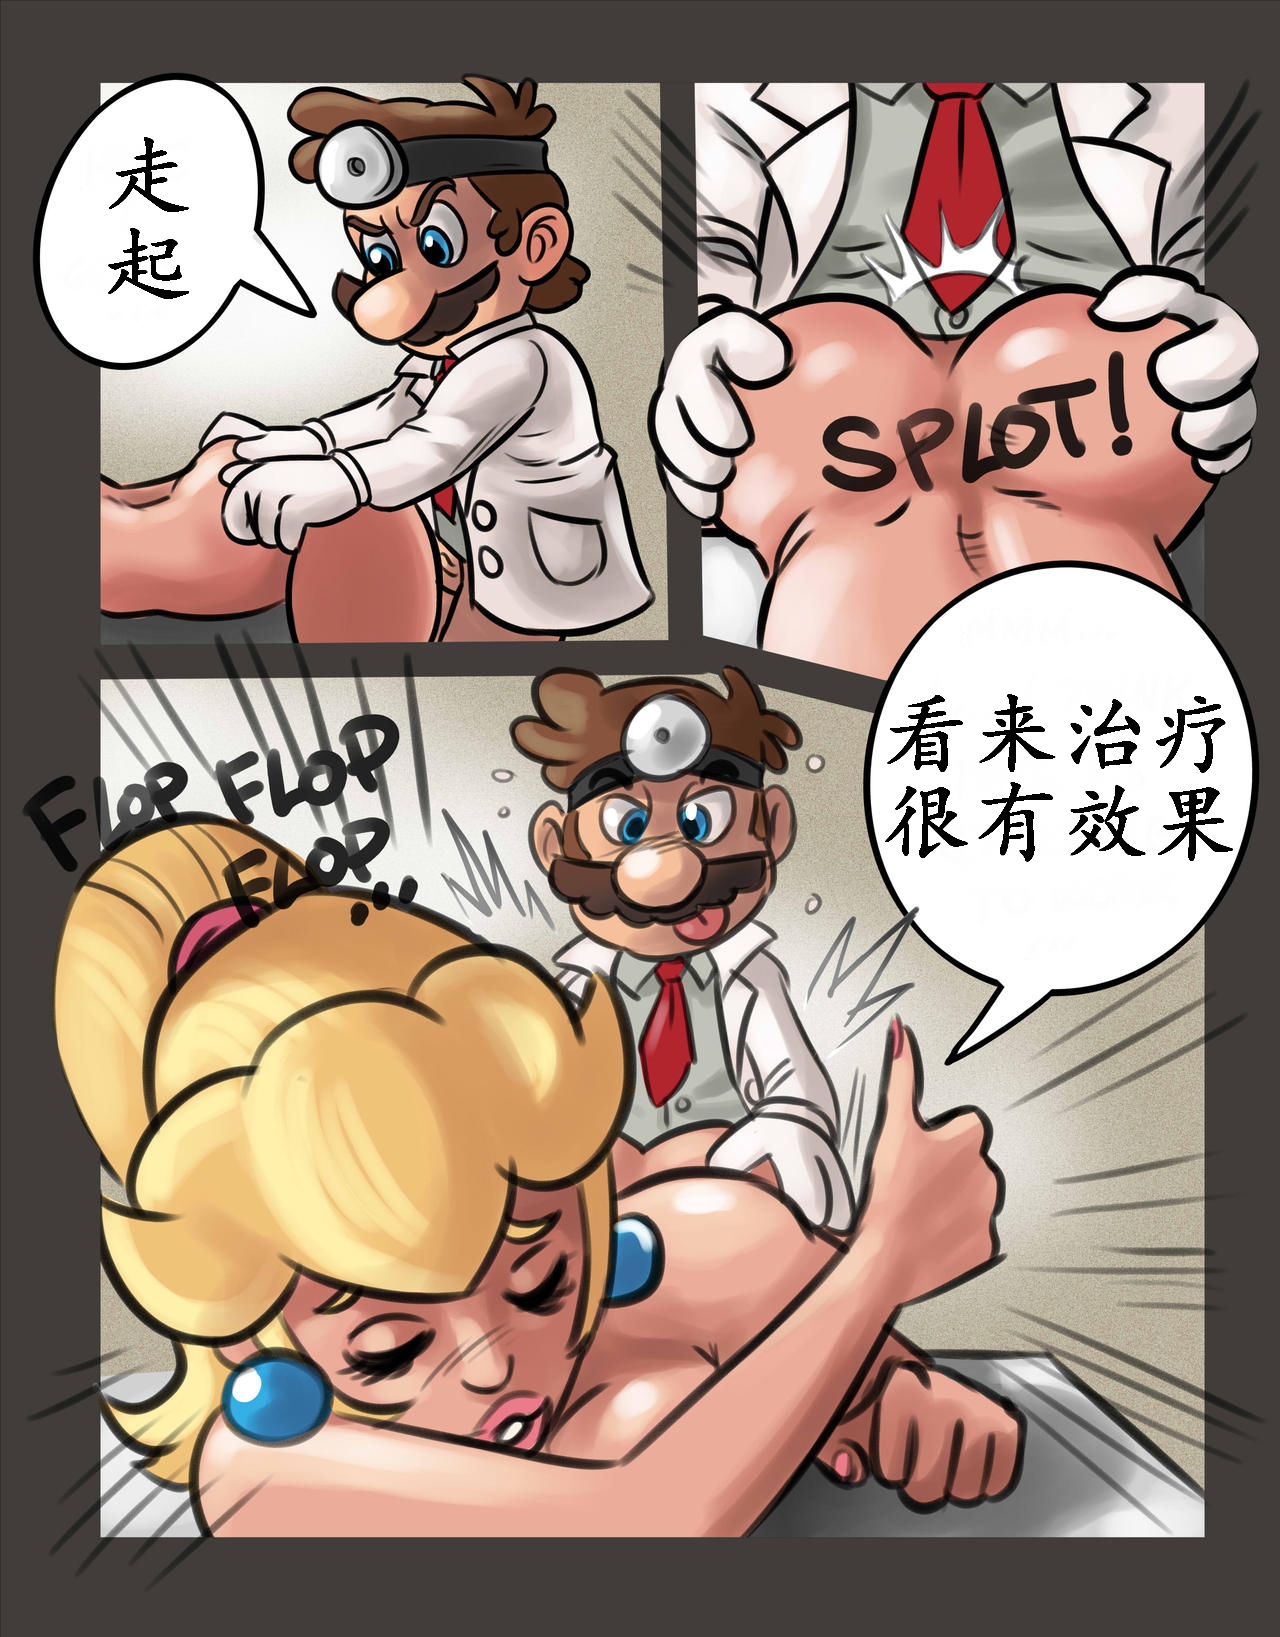 [Psicoero]马里奥医生-二度确诊（K记翻译） [Psicoero] Dr. Mario xXx: Second Opinion (Super Mario Bros.)